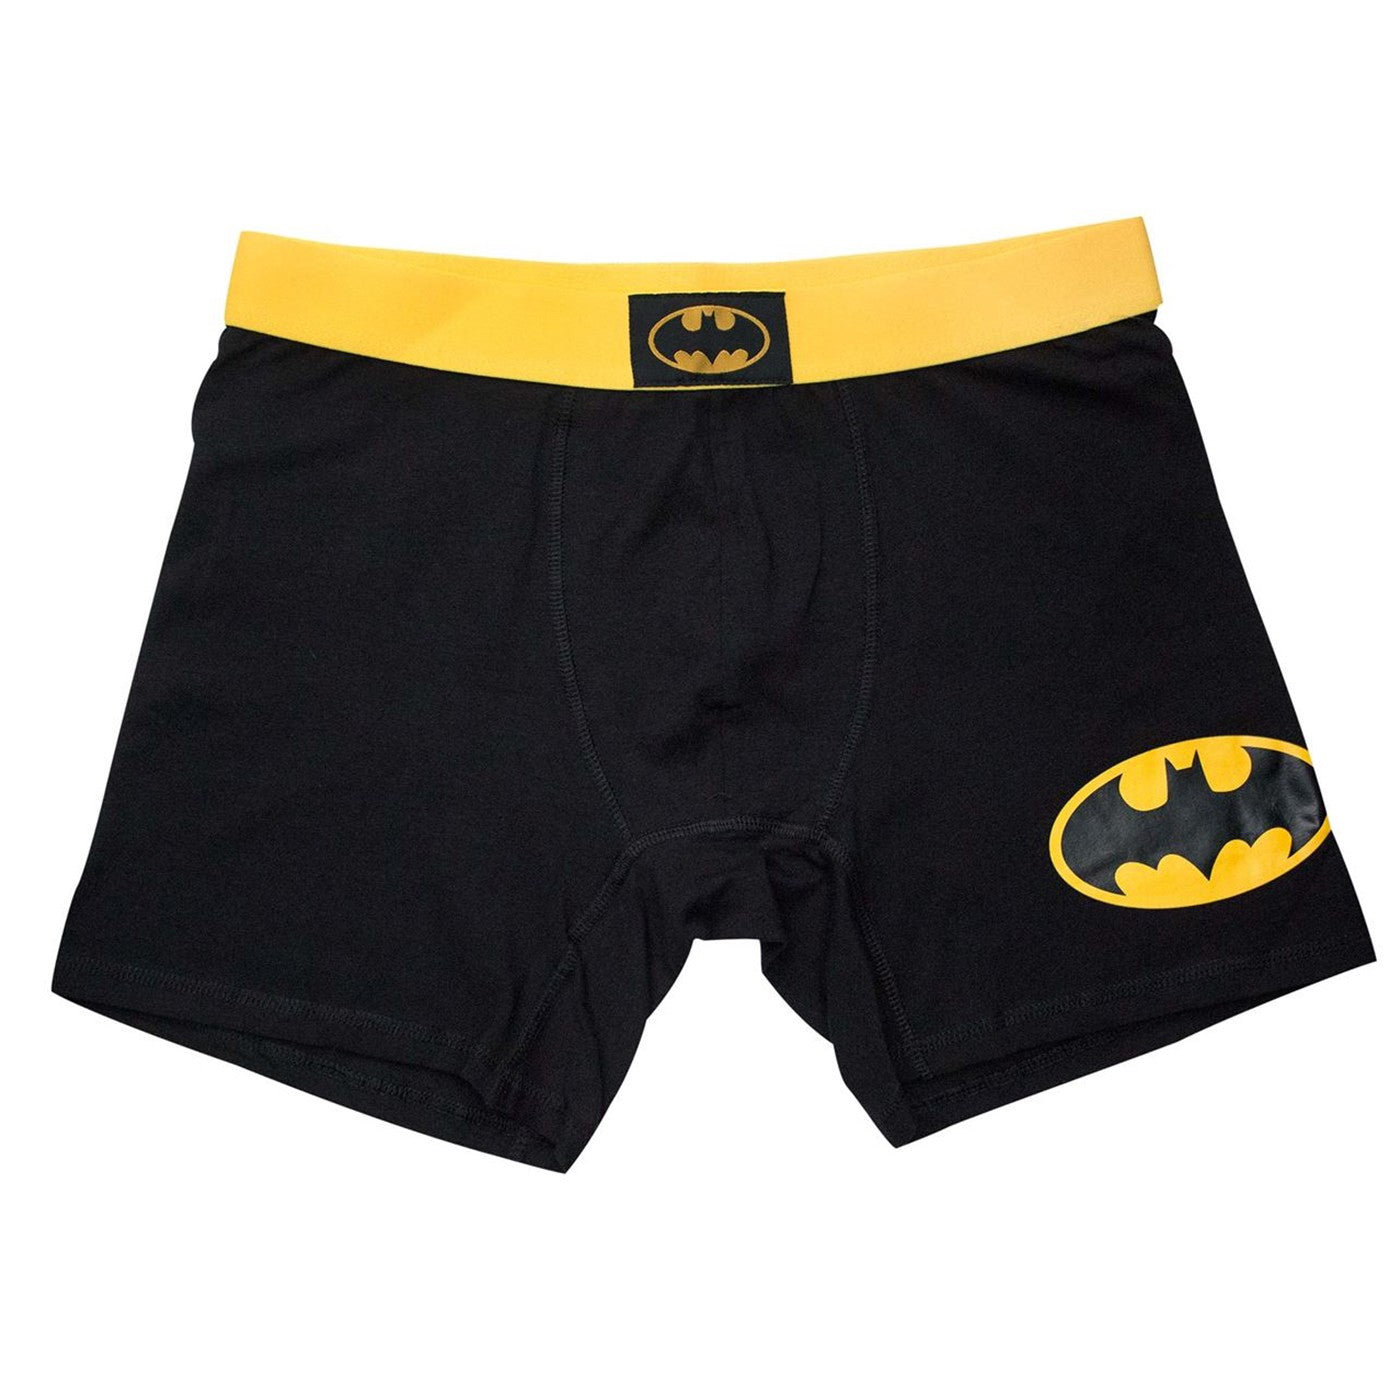 Batman Classic Men's Underwear Boxer Briefs